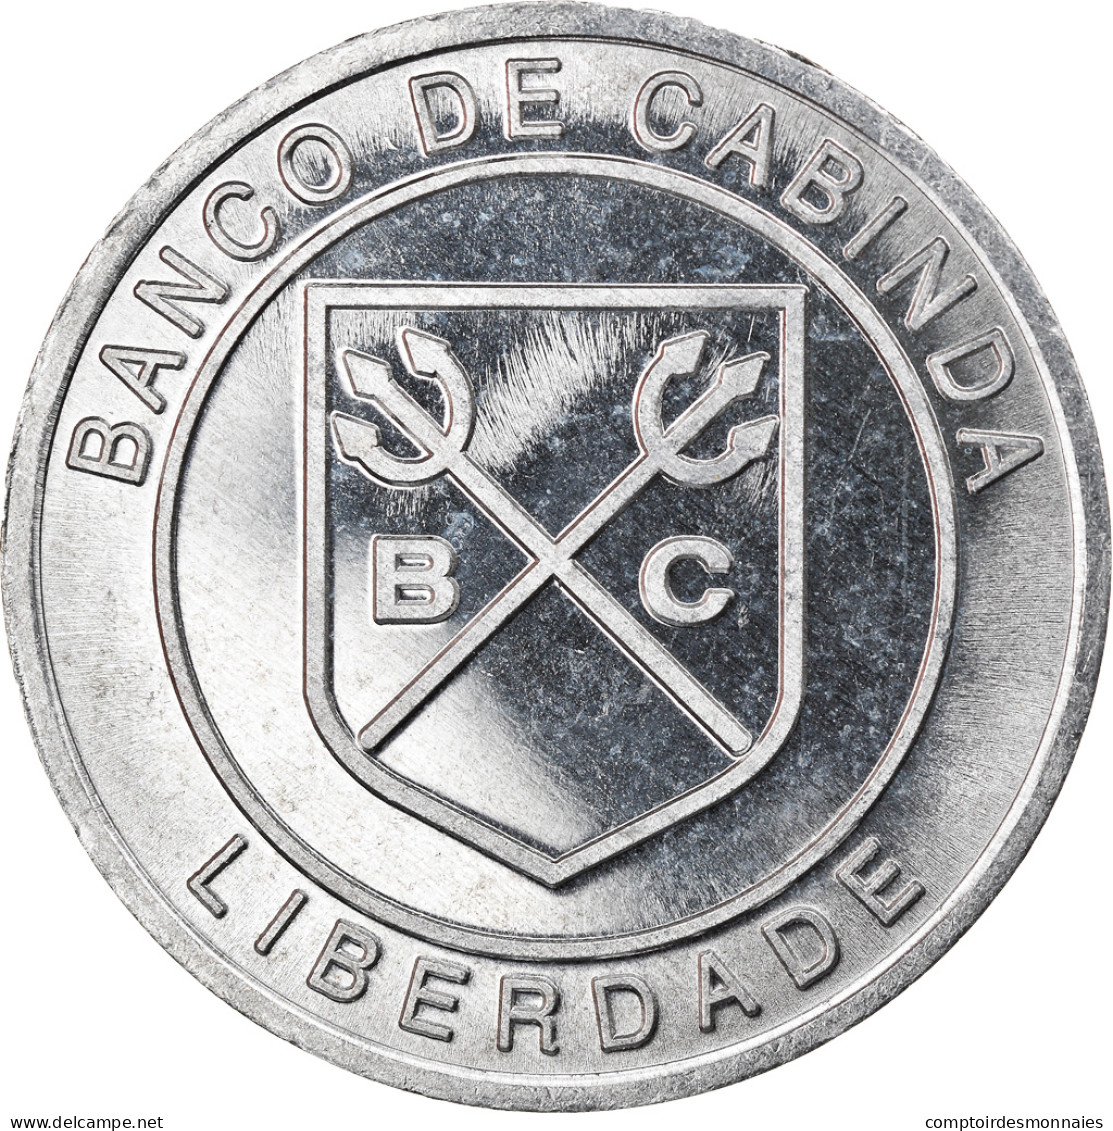 Monnaie, CABINDA, Cinq Cents Millions De Reais, 2017, SPL, Aluminium - Angola